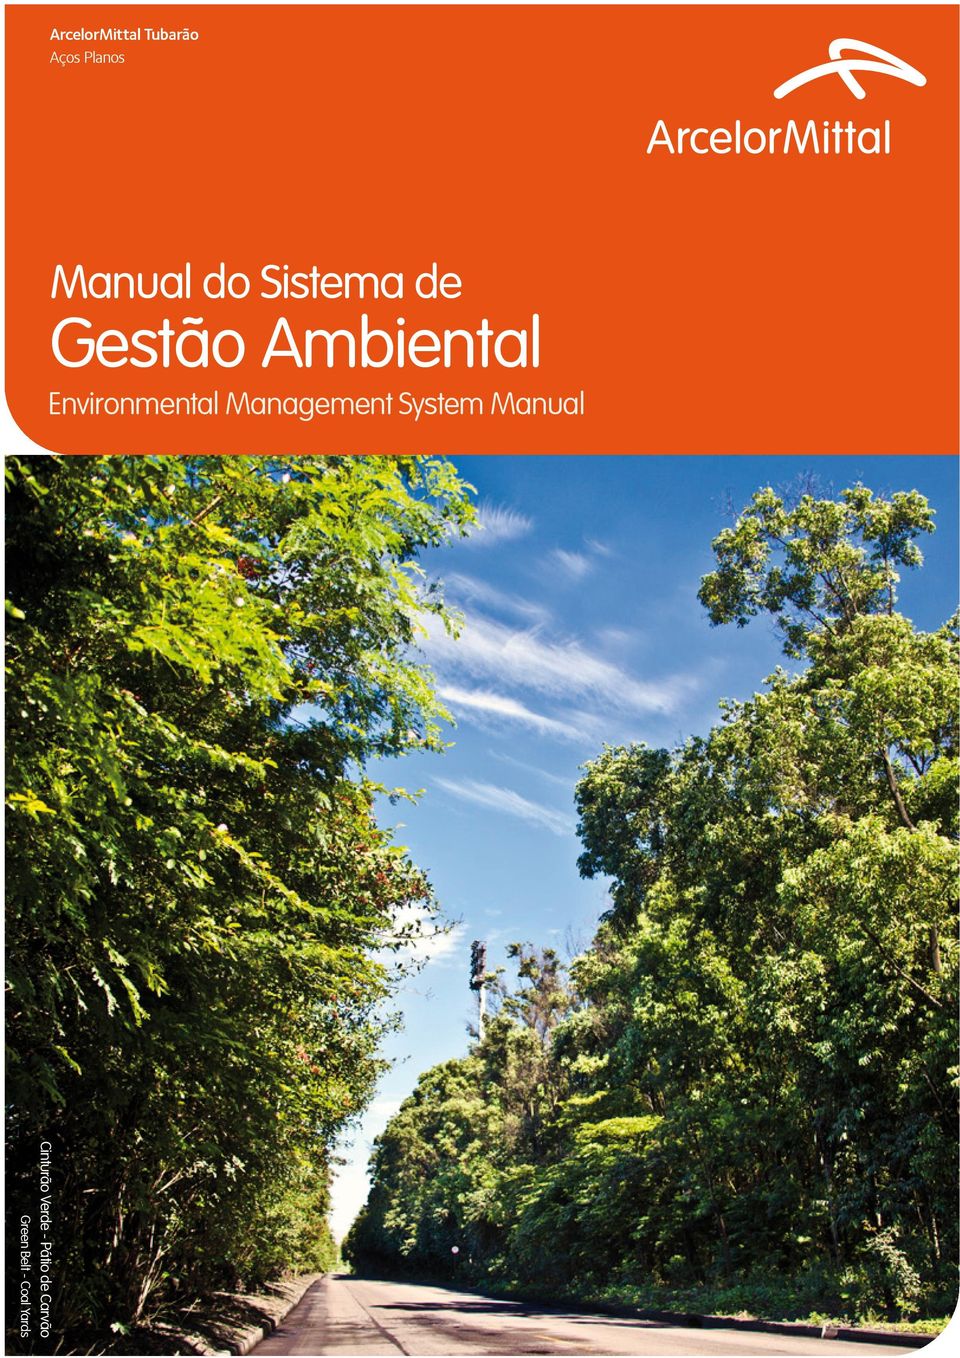 Environmental Management System Manual